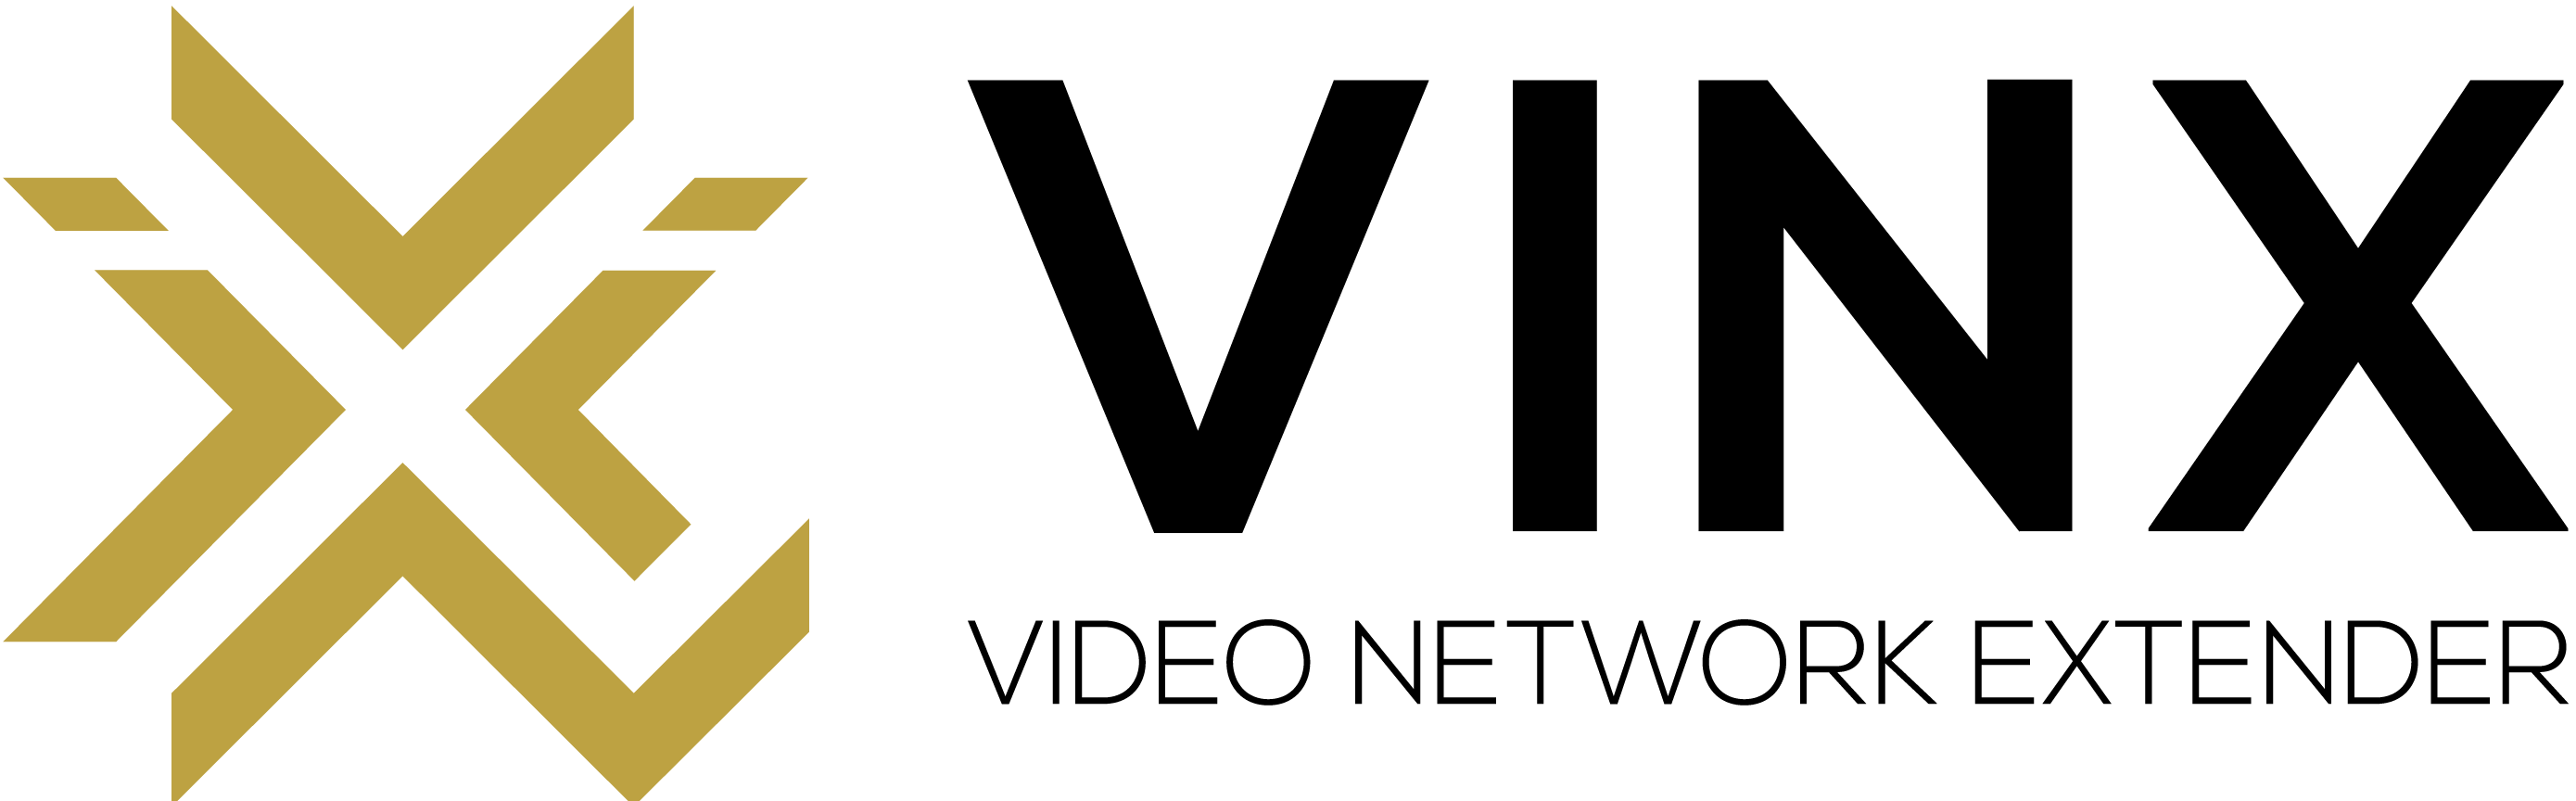 VINX logo